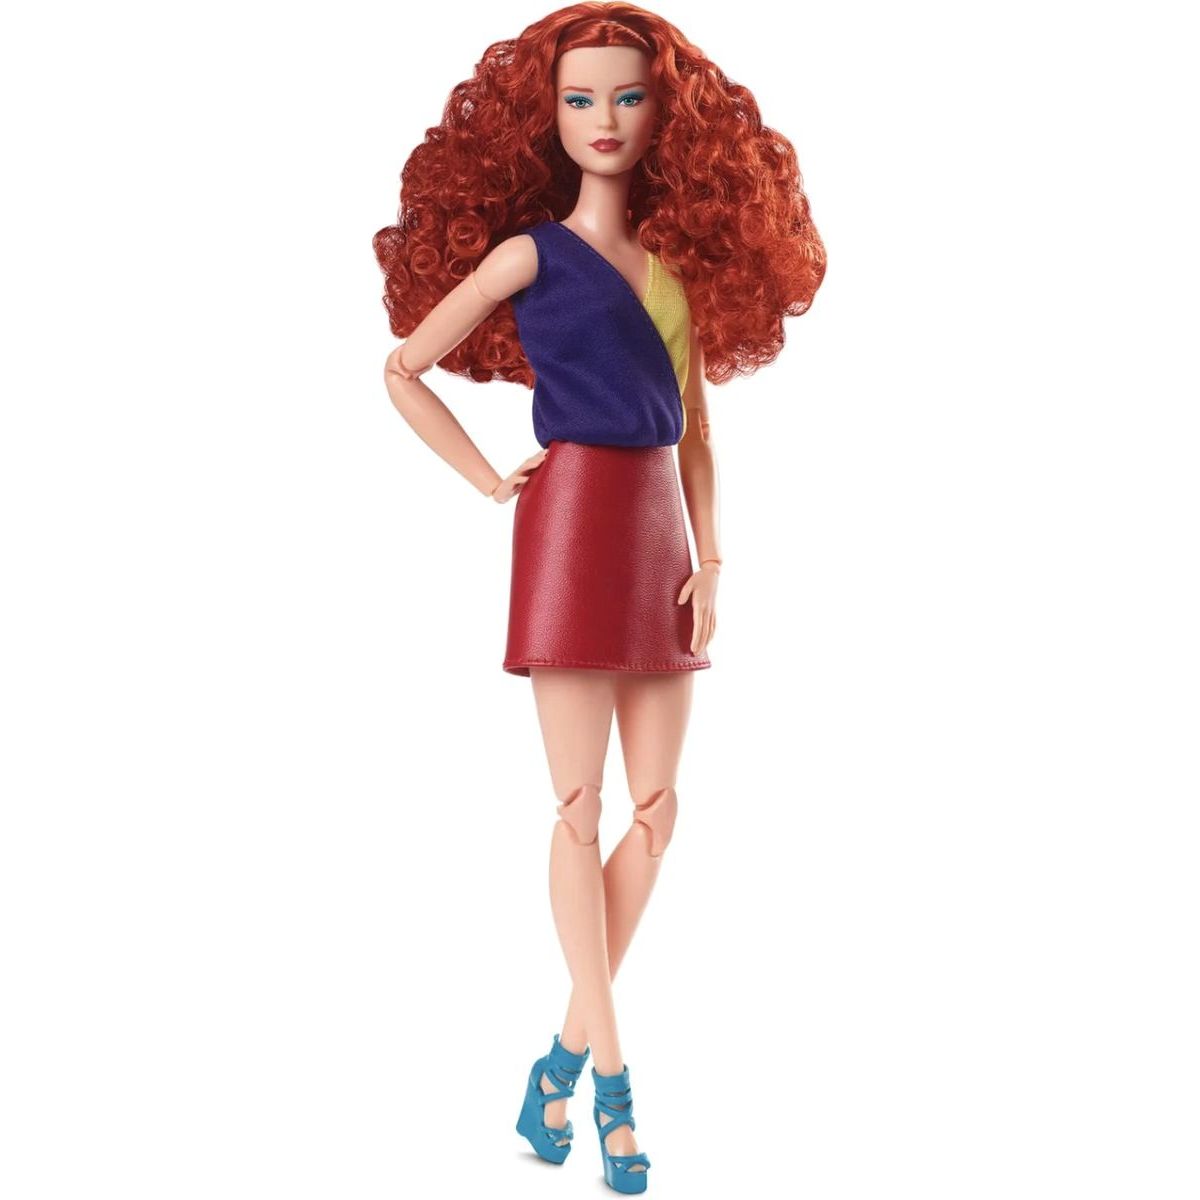 Mattel Barbie Looks rusovláska v červené sukni HJW80